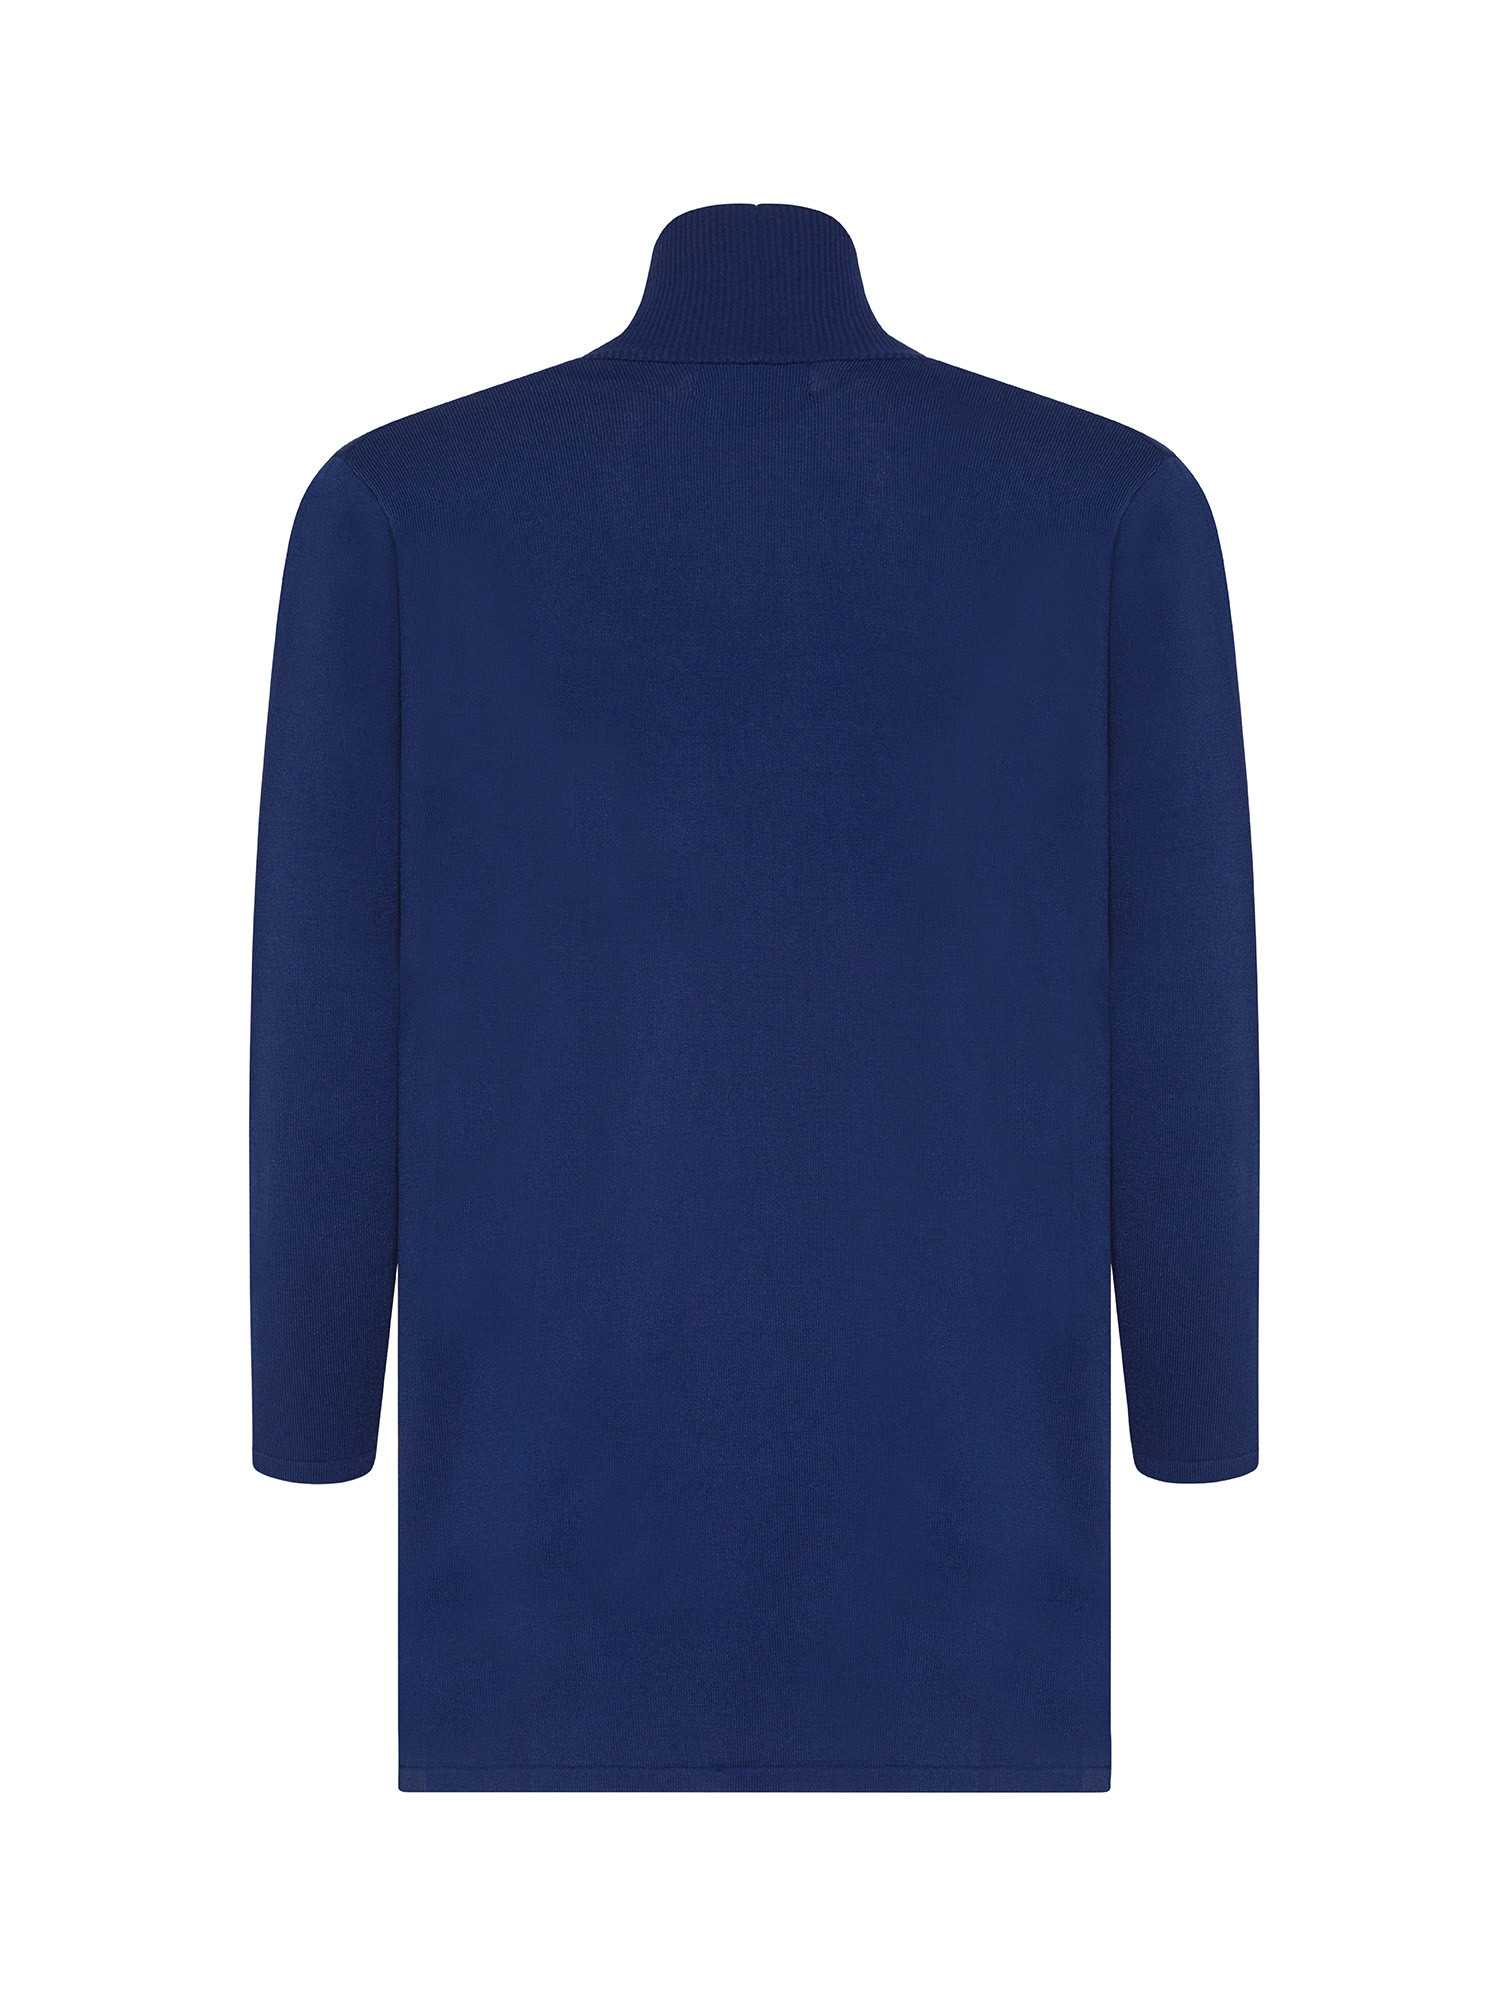 Koan - Cardigan with 3/4 sleeves, Dark Blue, large image number 1